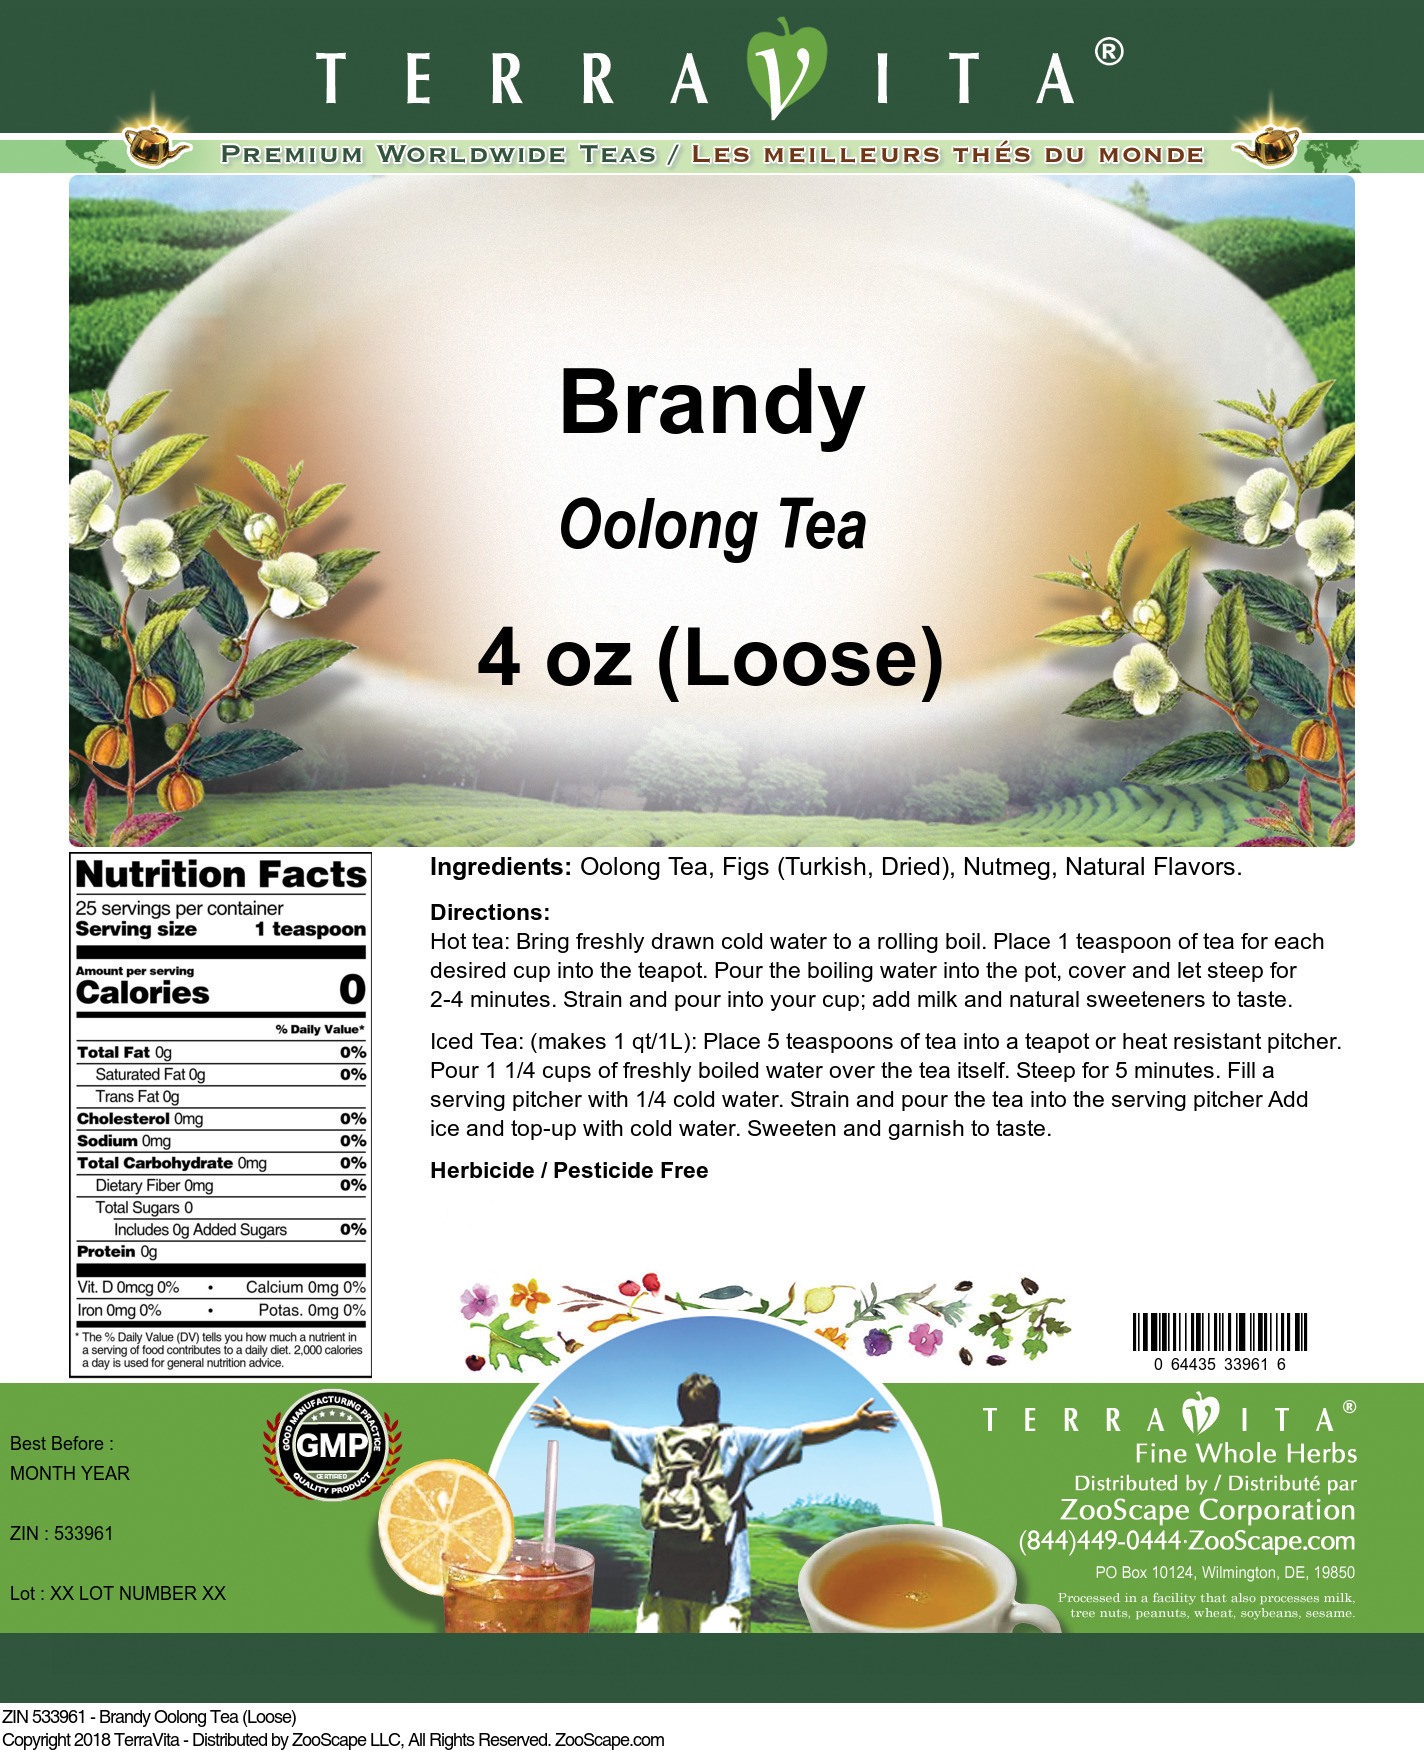 Brandy Oolong Tea (Loose) - Label